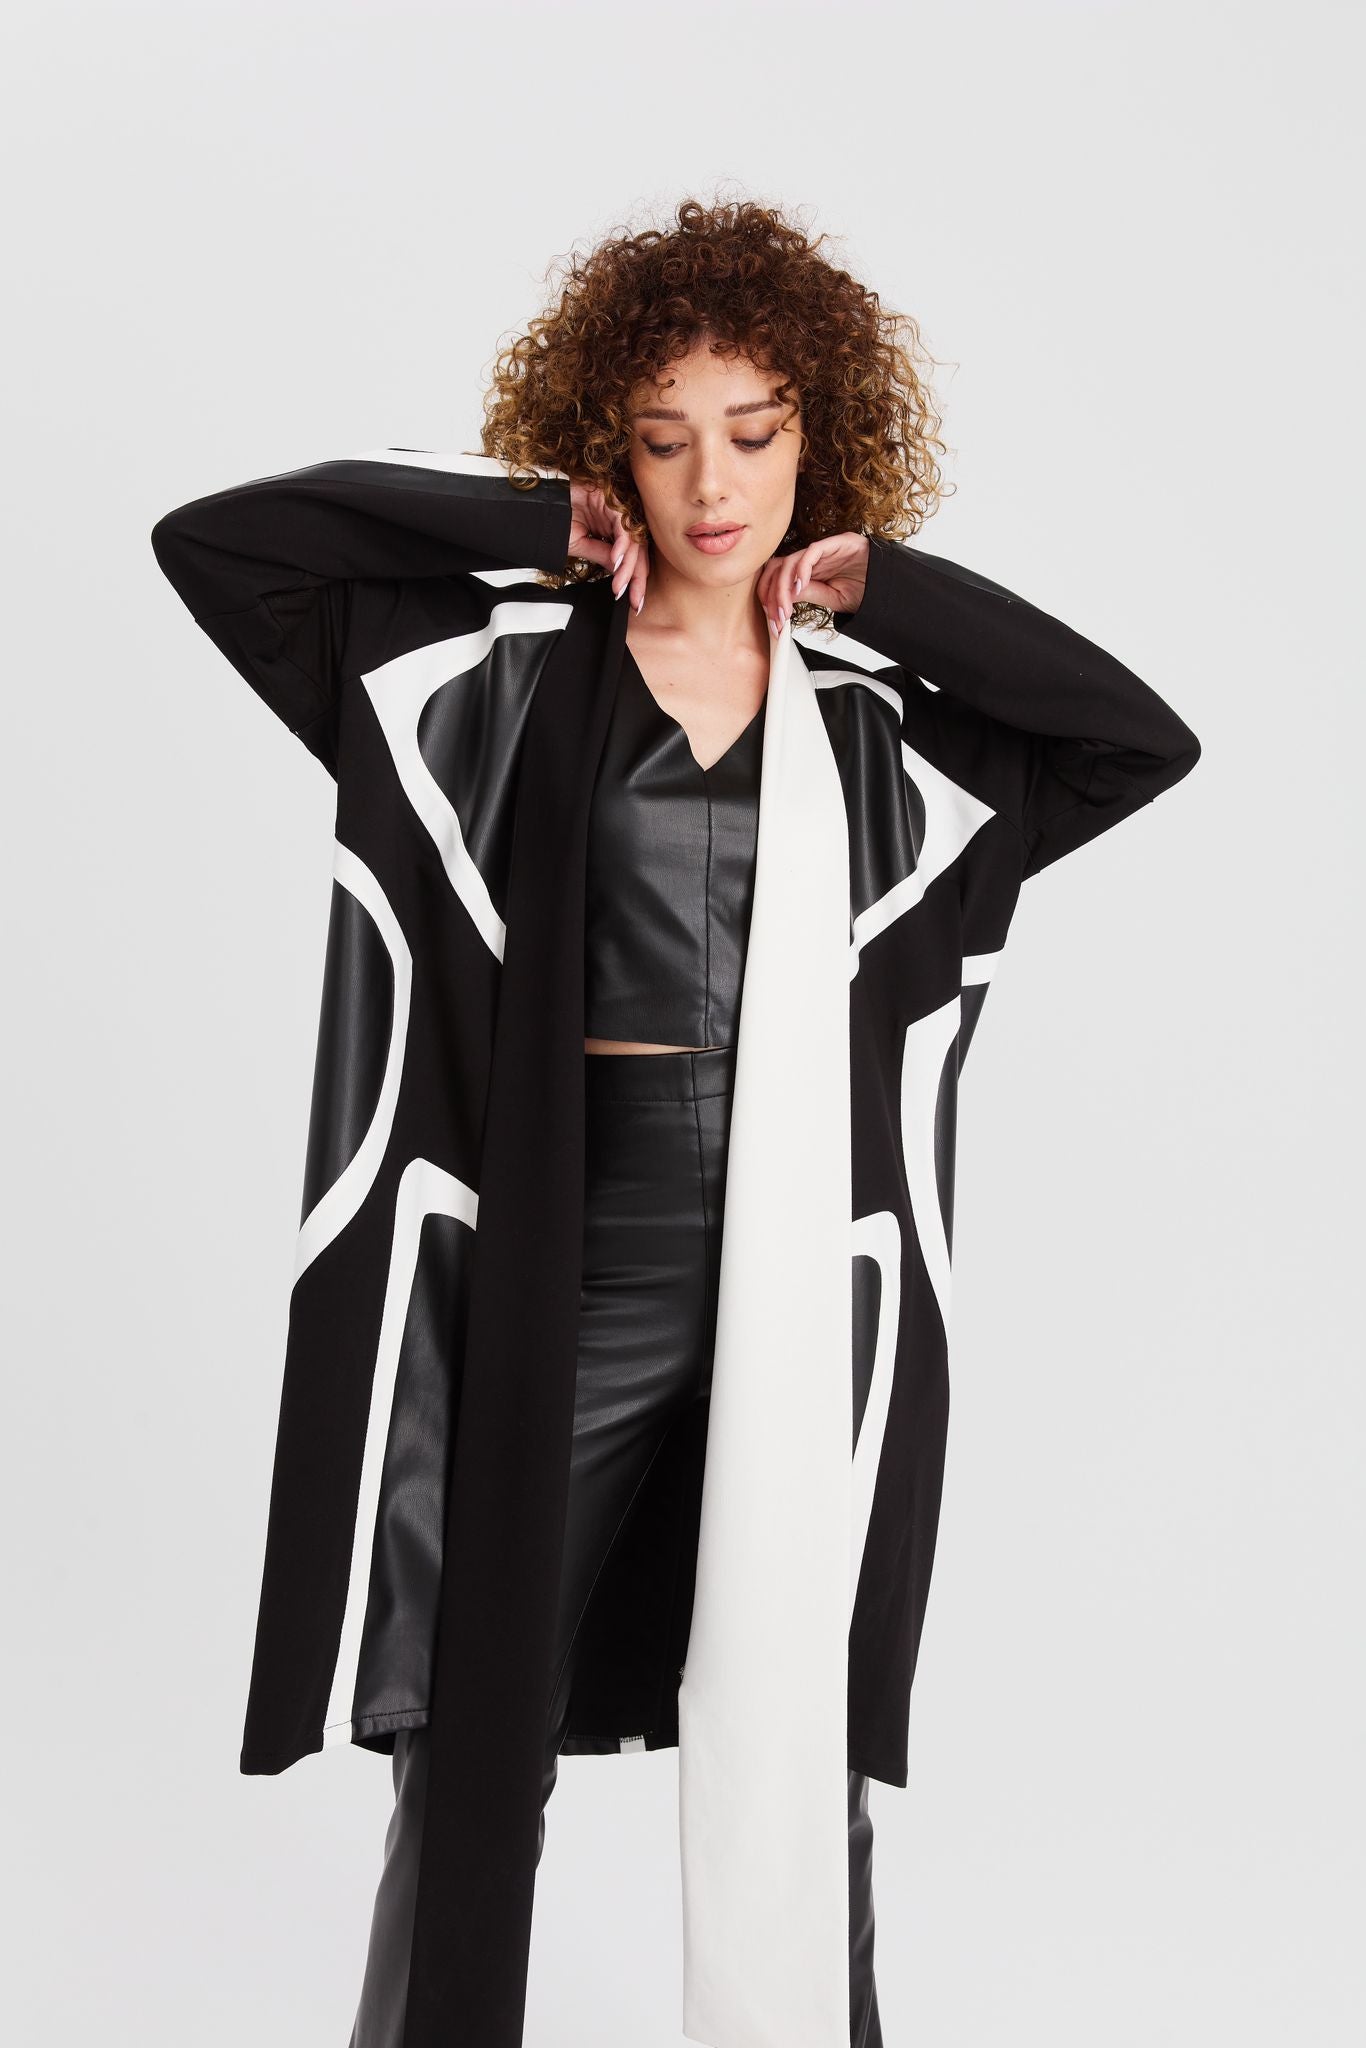 Designer Black & White Jacket Cardigan Design C-7